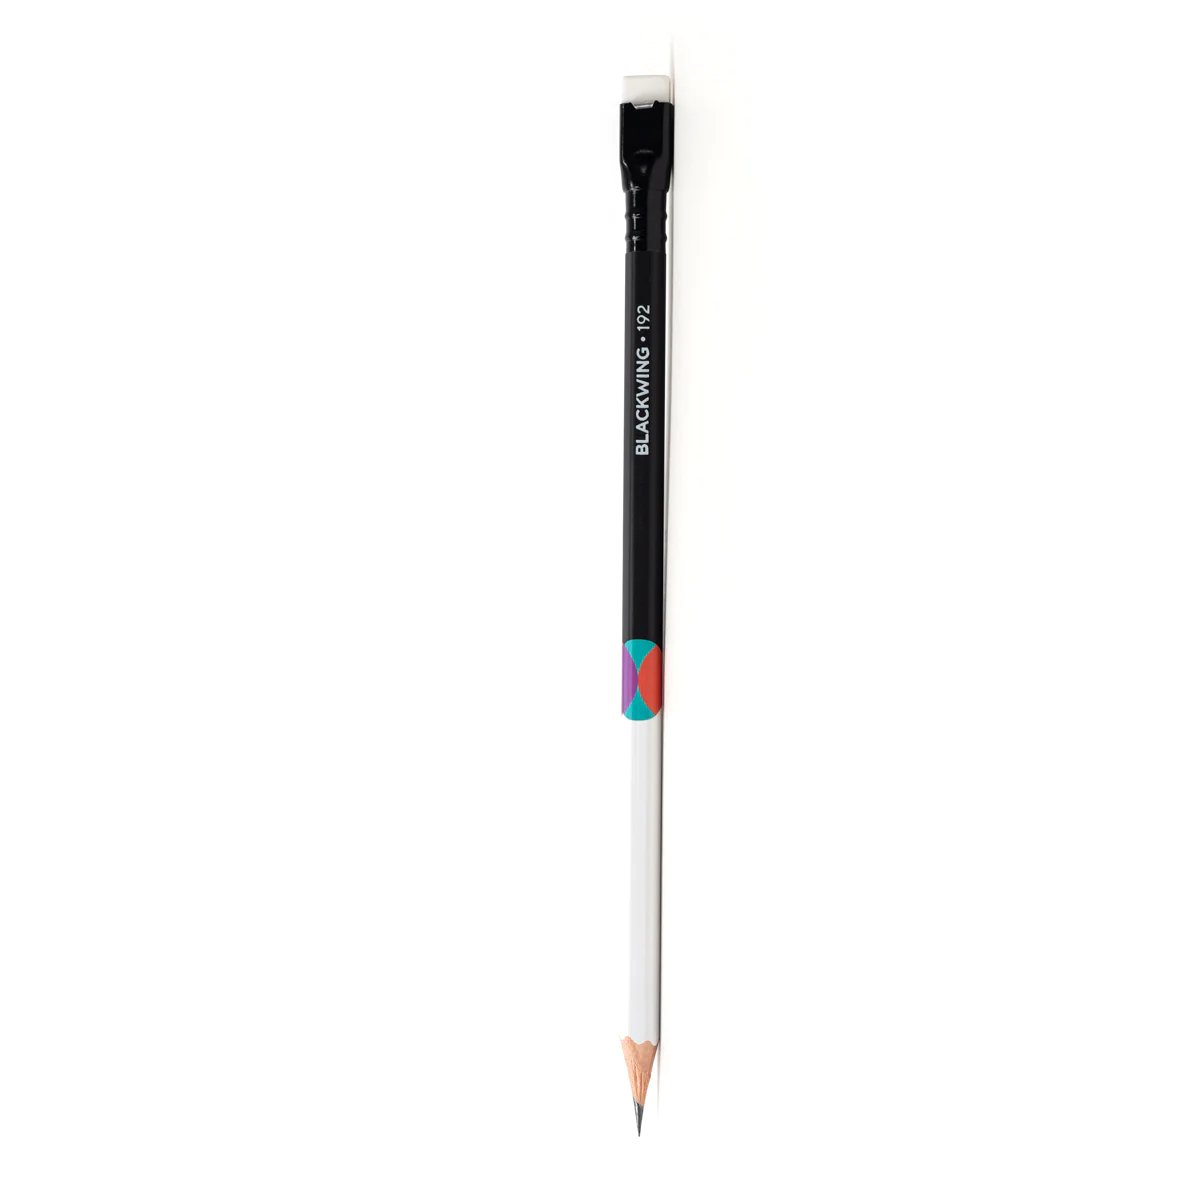 Blackwing Graphite Pencil Volume 192 Lennon & McCartney - Pencraft the boutique